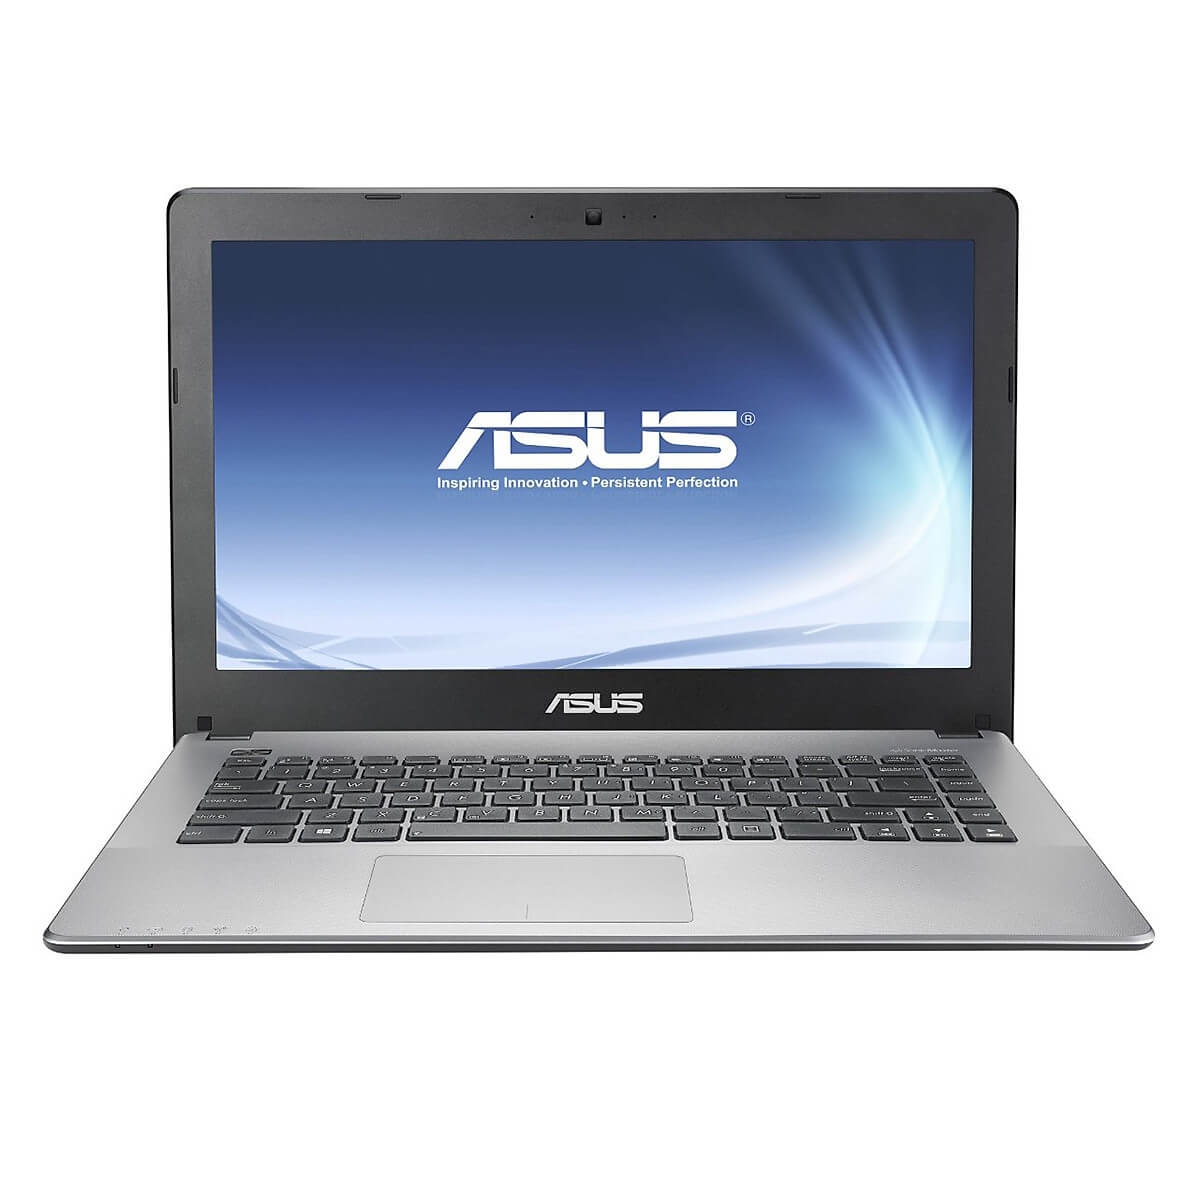 Laptop Asus X455LAB Core i3-5005U, Ram 4GB, HDD 500GB, 14 Inch HD